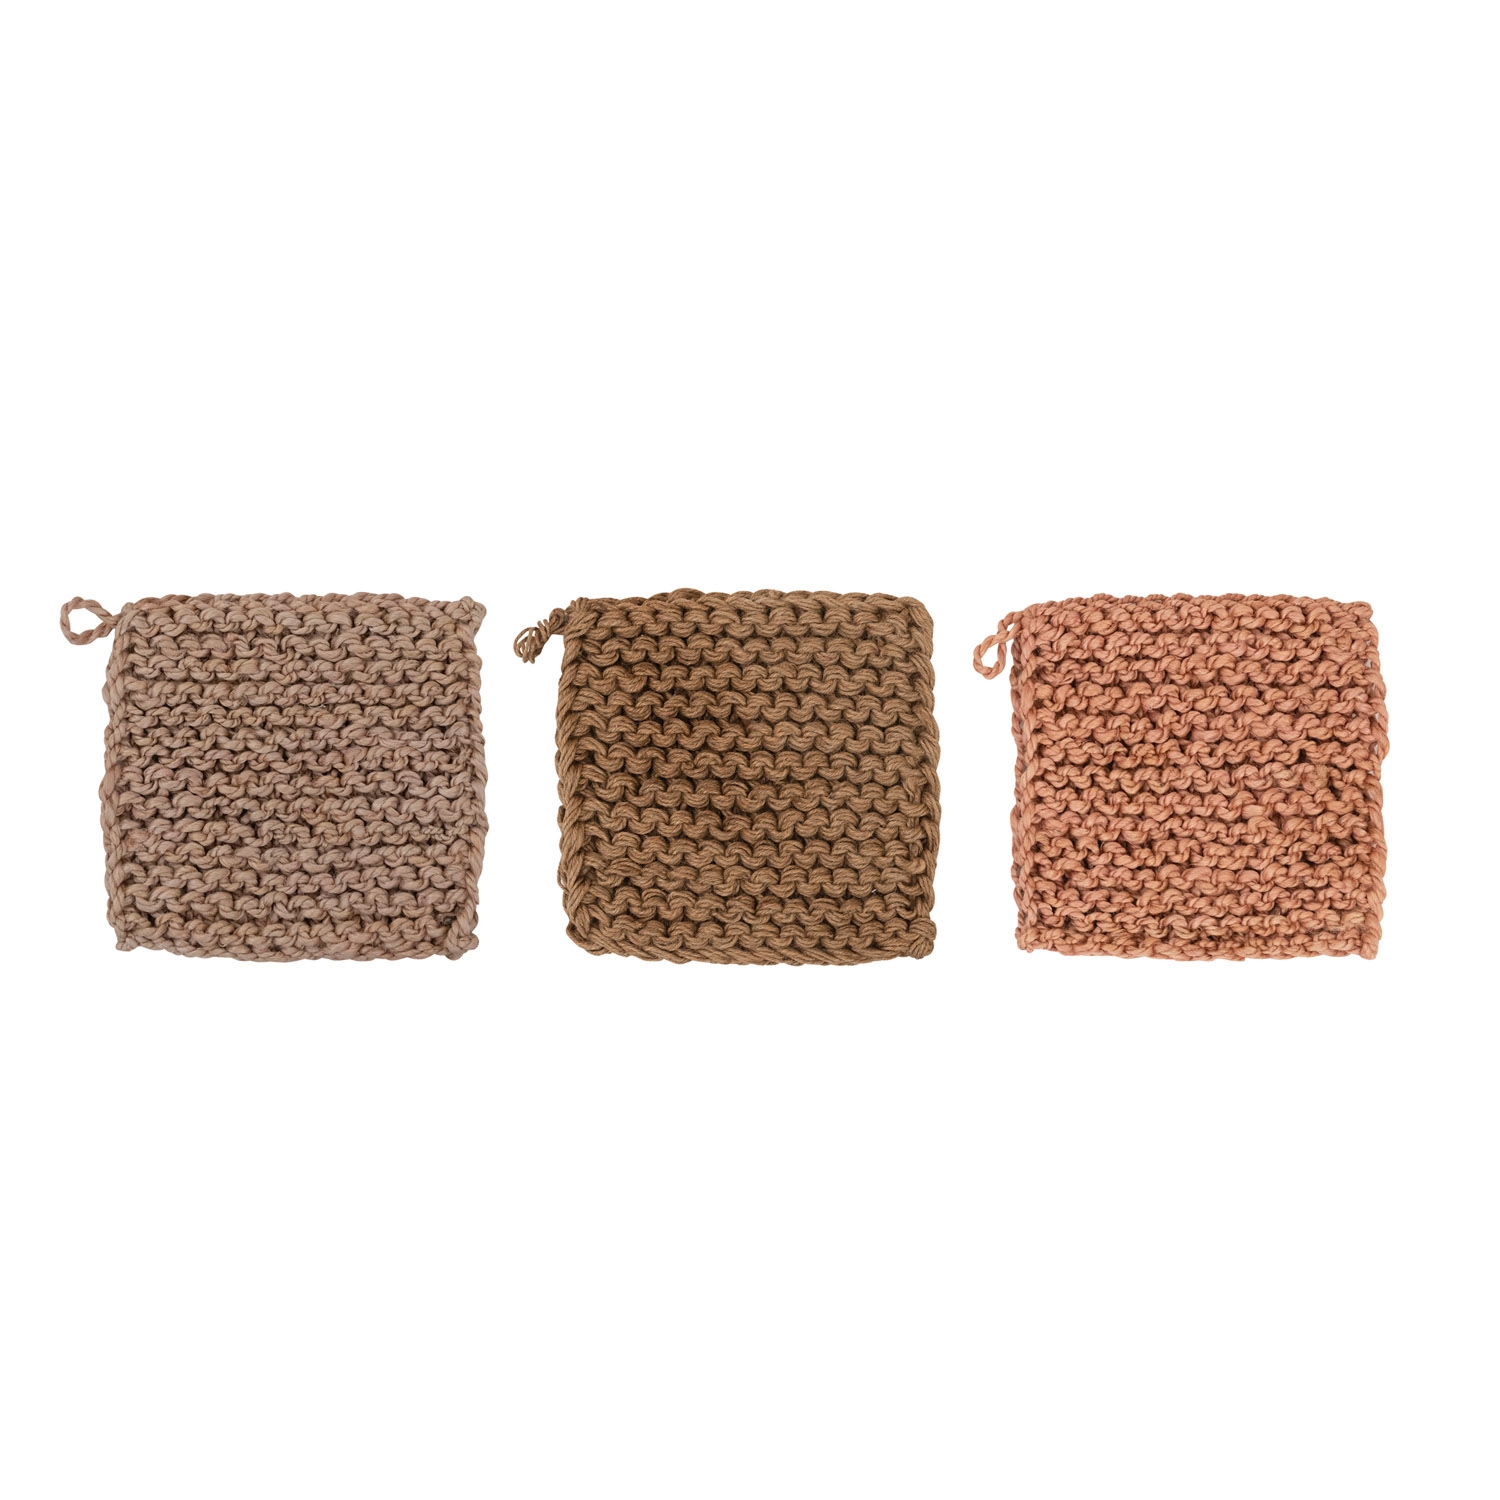 Square Jute Crocheted Pot Holder, 3 Colors - Image 0